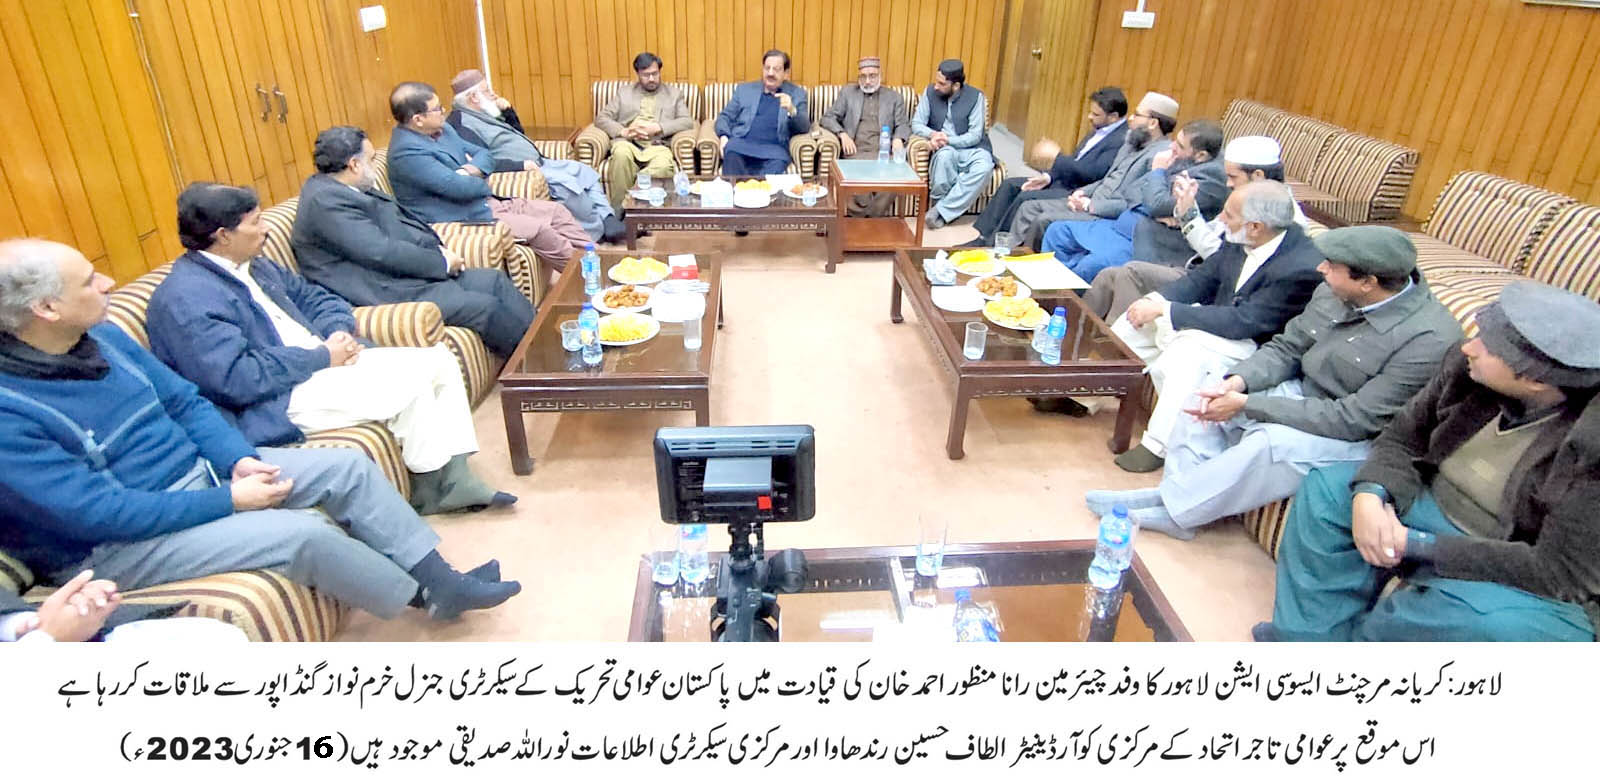 Delegation of businessmen met Khurram Nawaz Gandapur